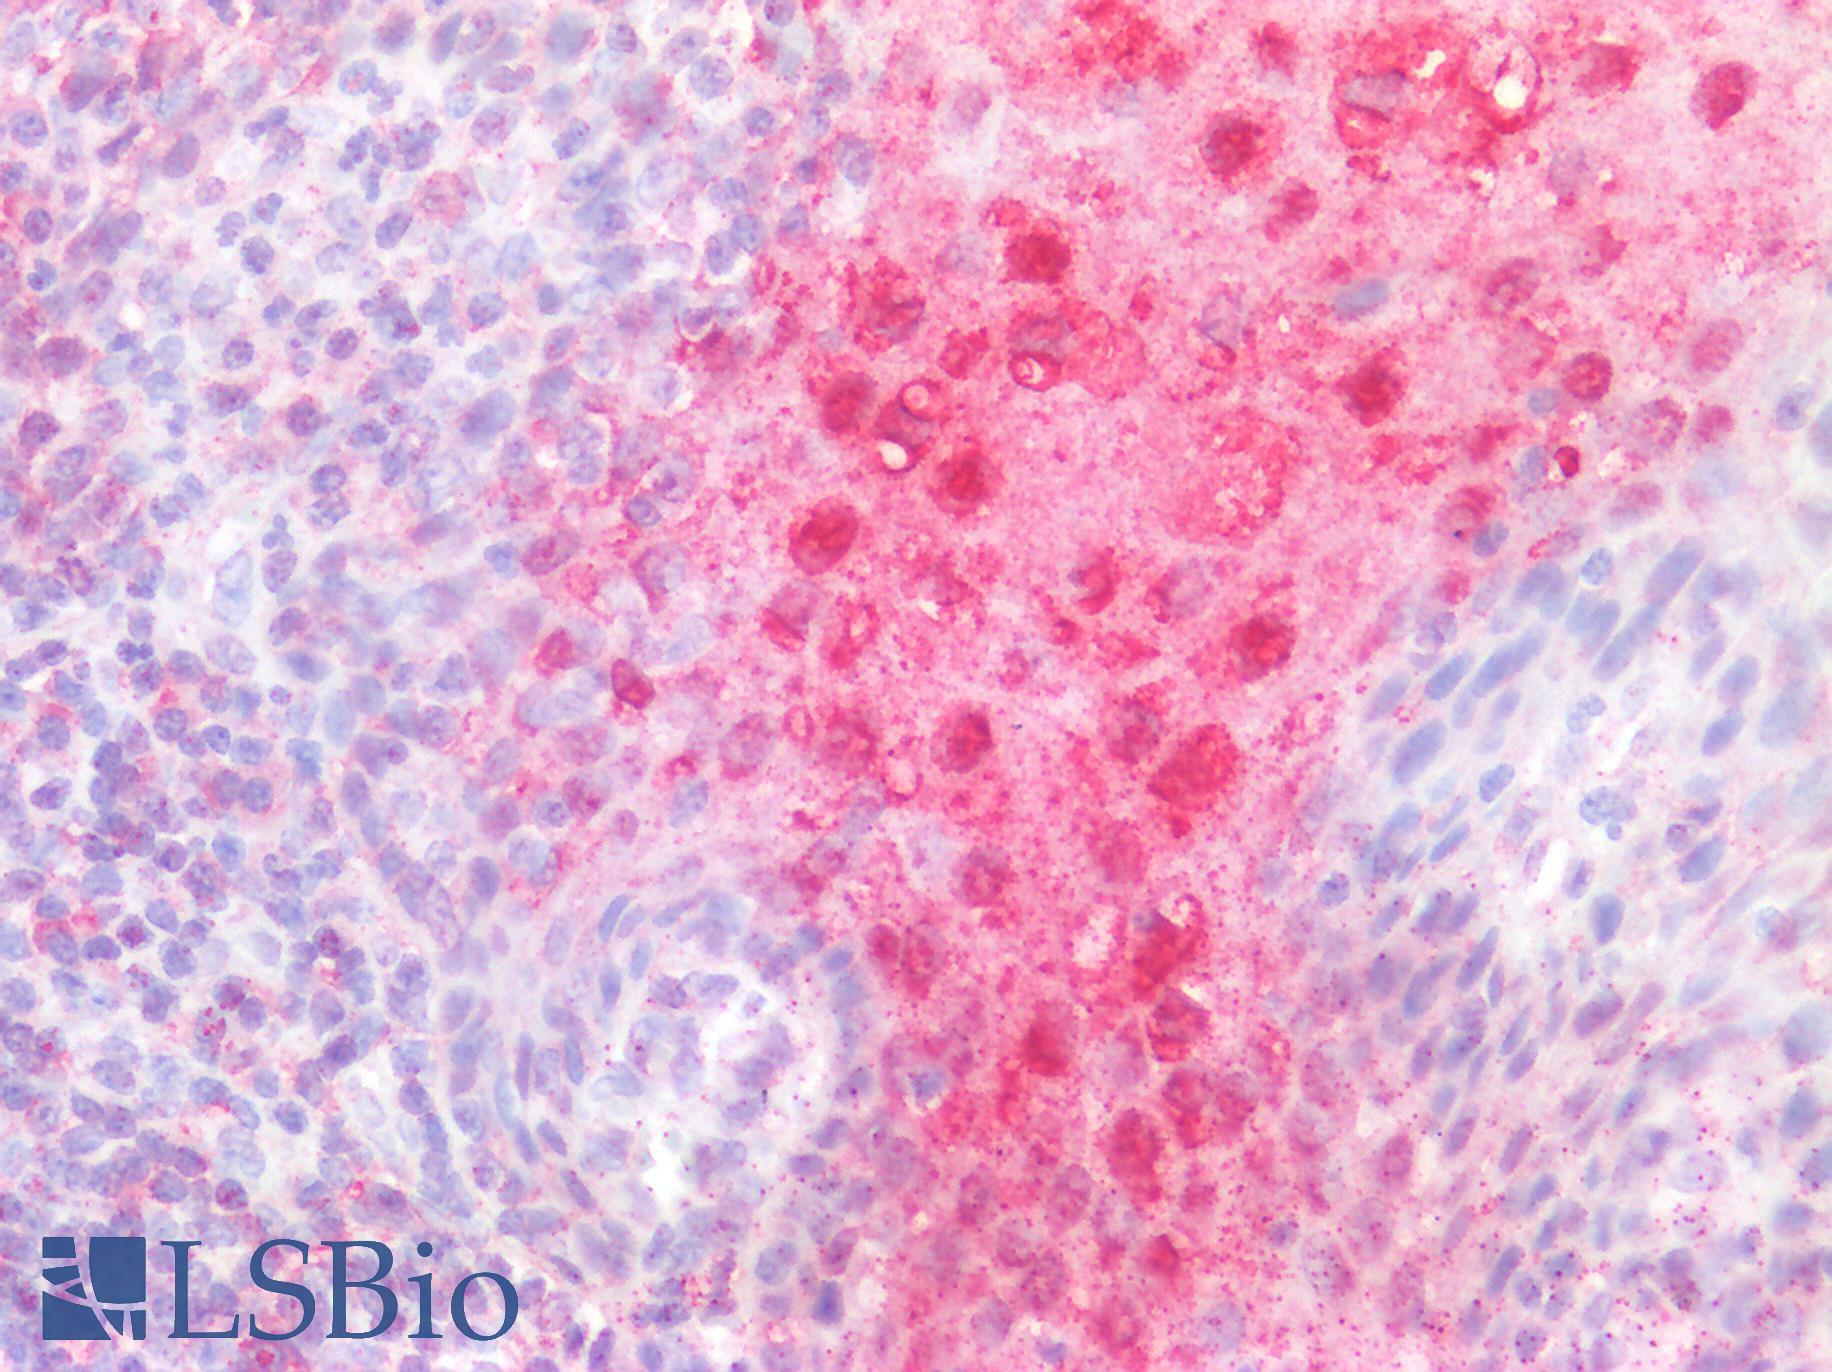 CD40 Antibody - Human Tonsil: Formalin-Fixed, Paraffin-Embedded (FFPE)